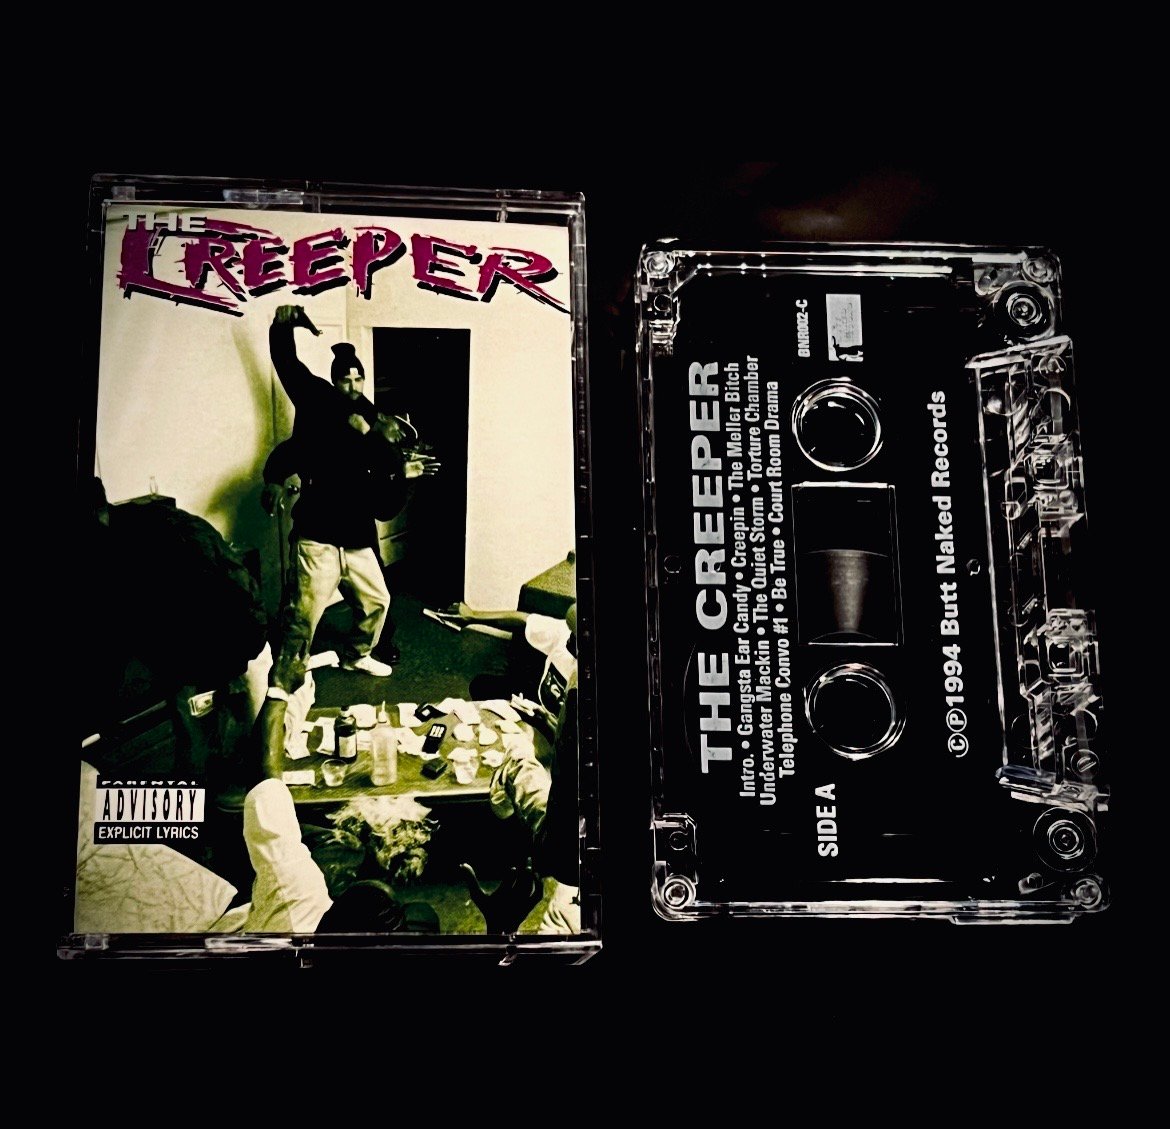 Image of The Creeper “The Creeper”